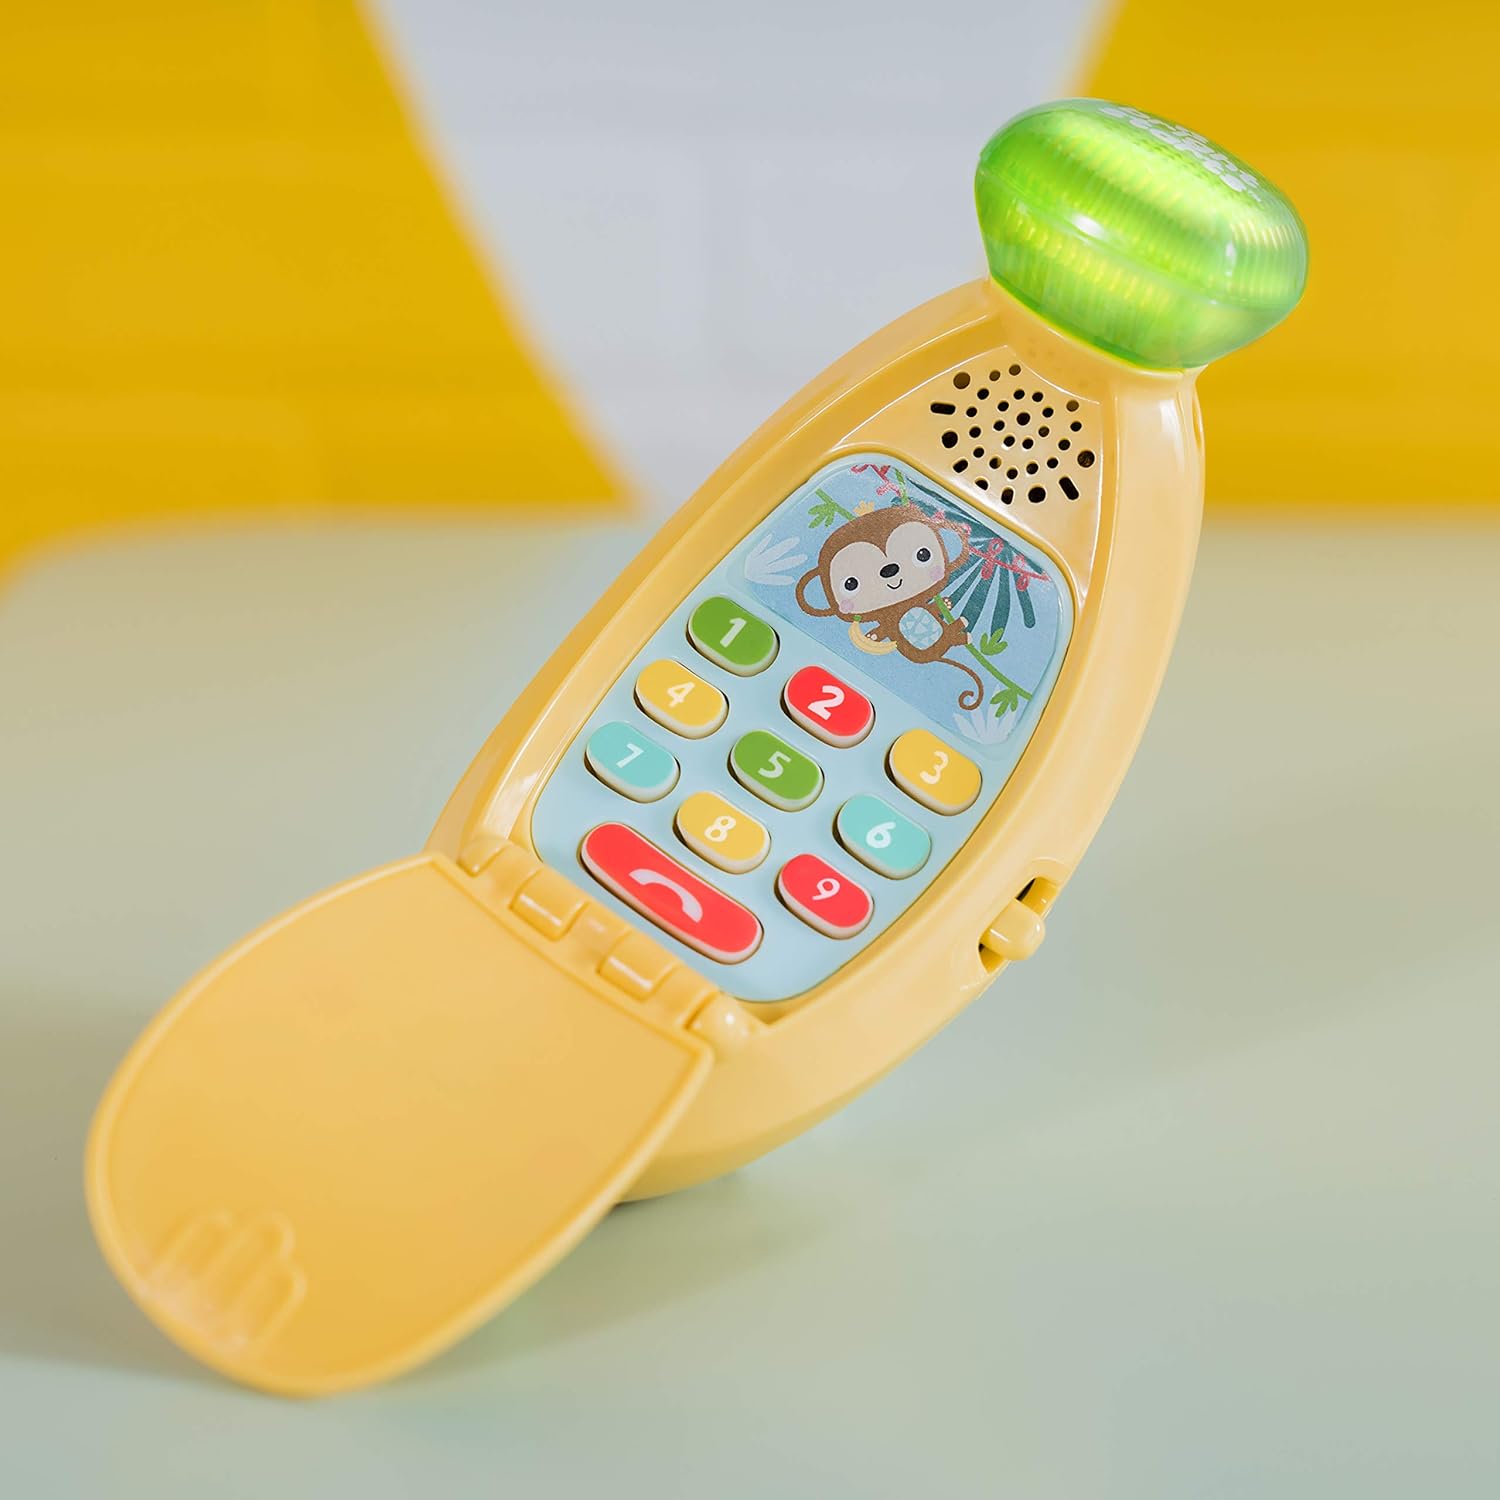 Bright Starts Babblin’ Banana Ring & Sing Light-Up Musical Baby Toy Flip Phone, 6 Months+